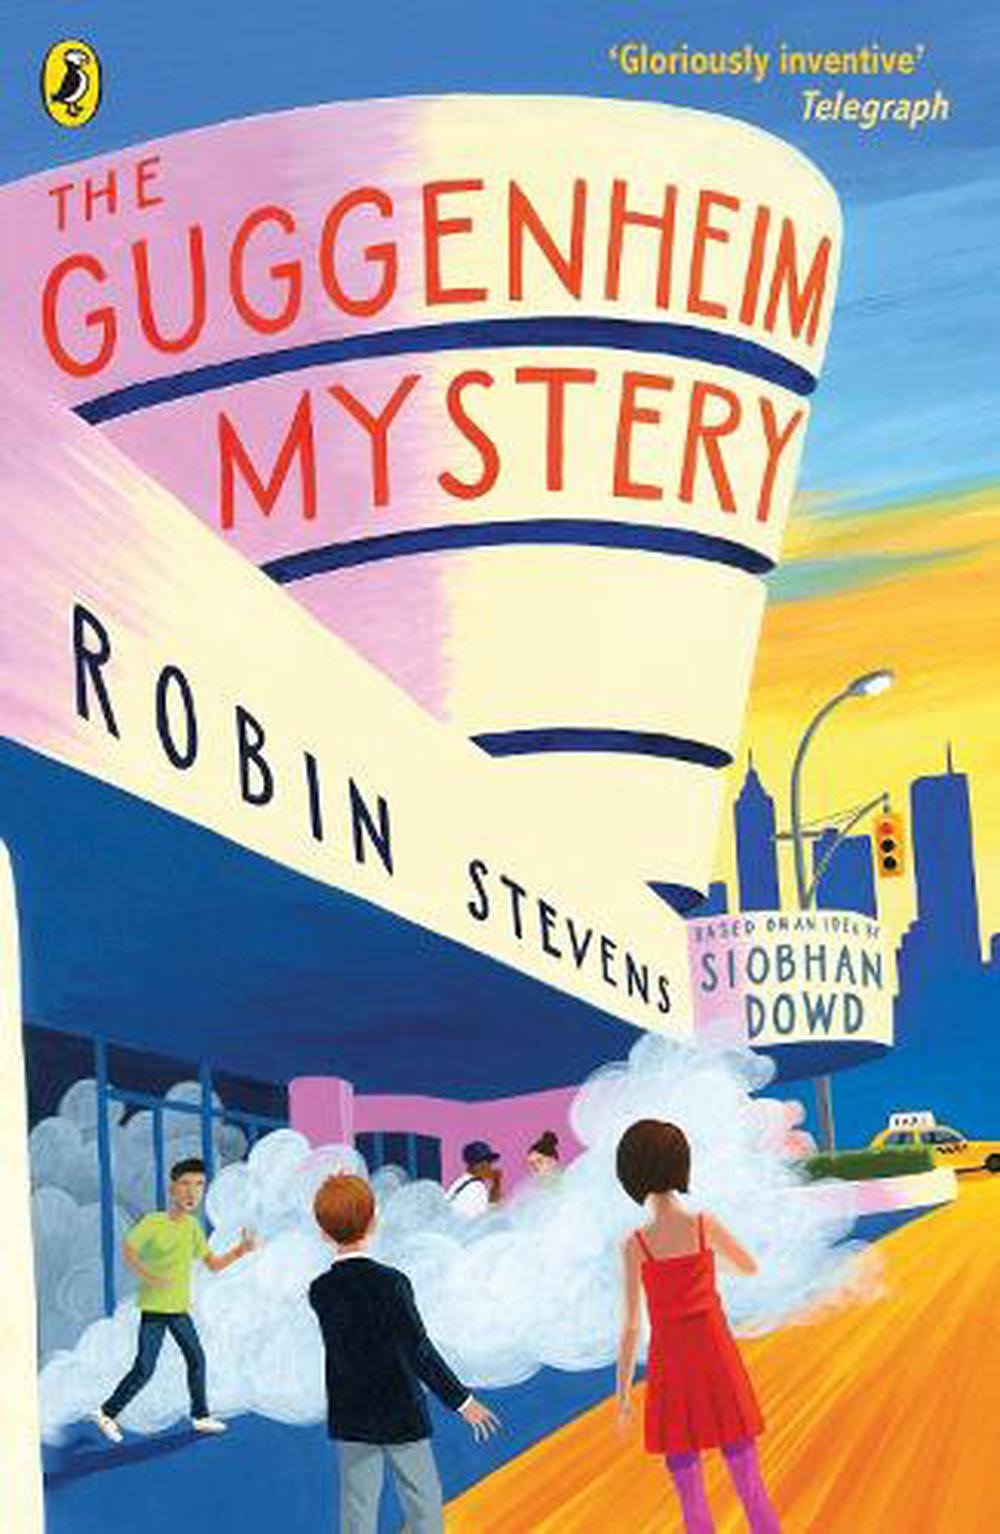 The Guggenheim Mystery - Robin Stevens and Siobhan Dowd